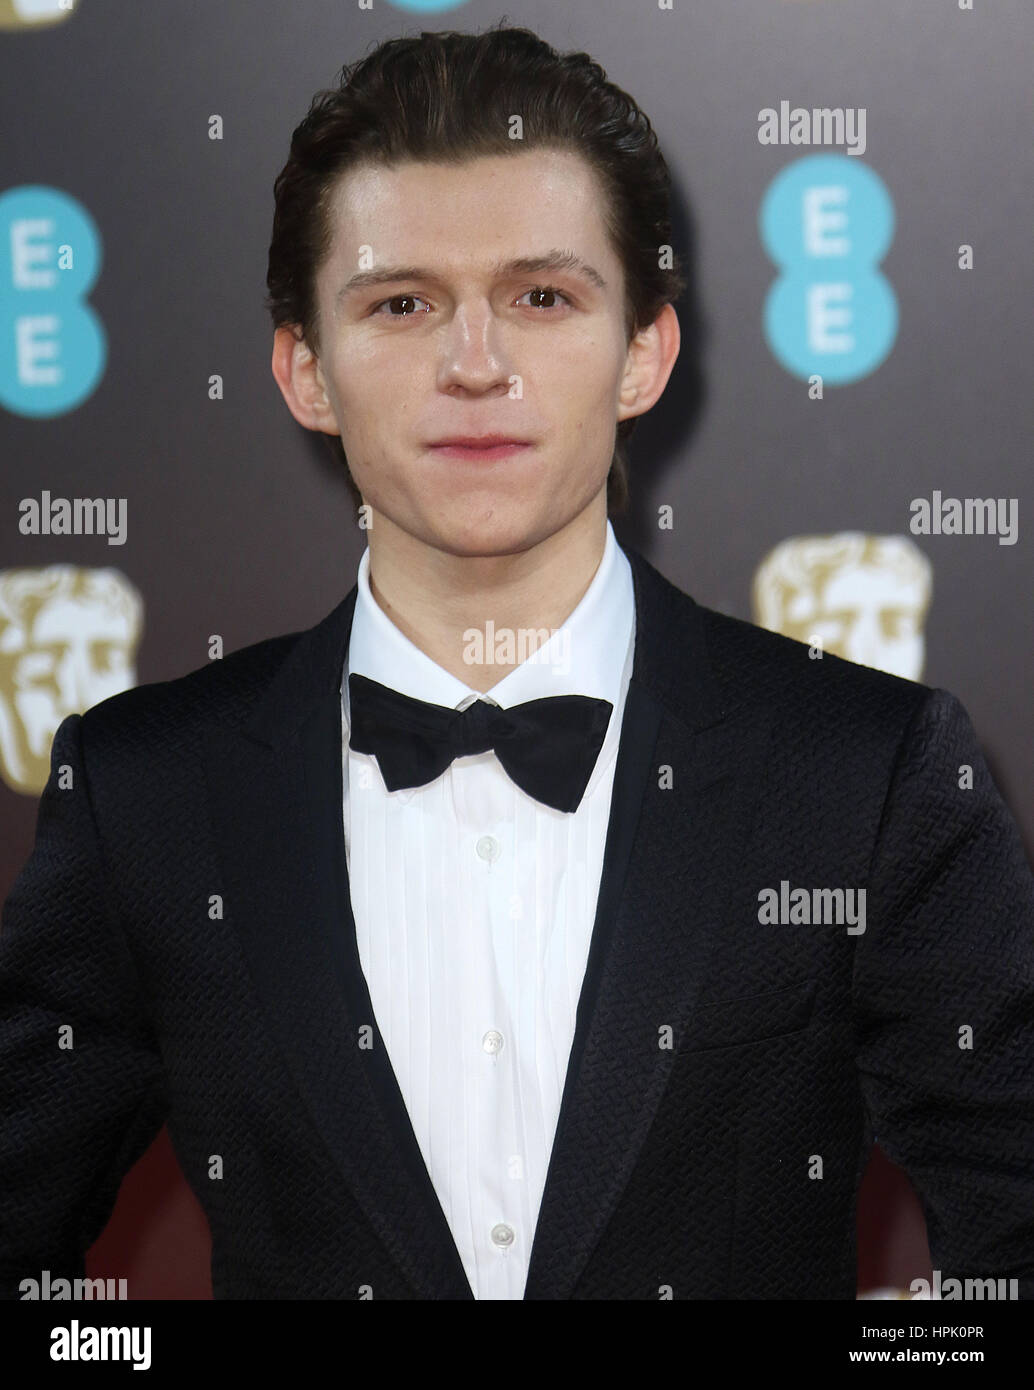 Feb 12, 2017 - Tom Holland frequentando EE British Academy Film Awards 2017 at Royal Opera House di Londra, Inghilterra, Regno Unito Foto Stock